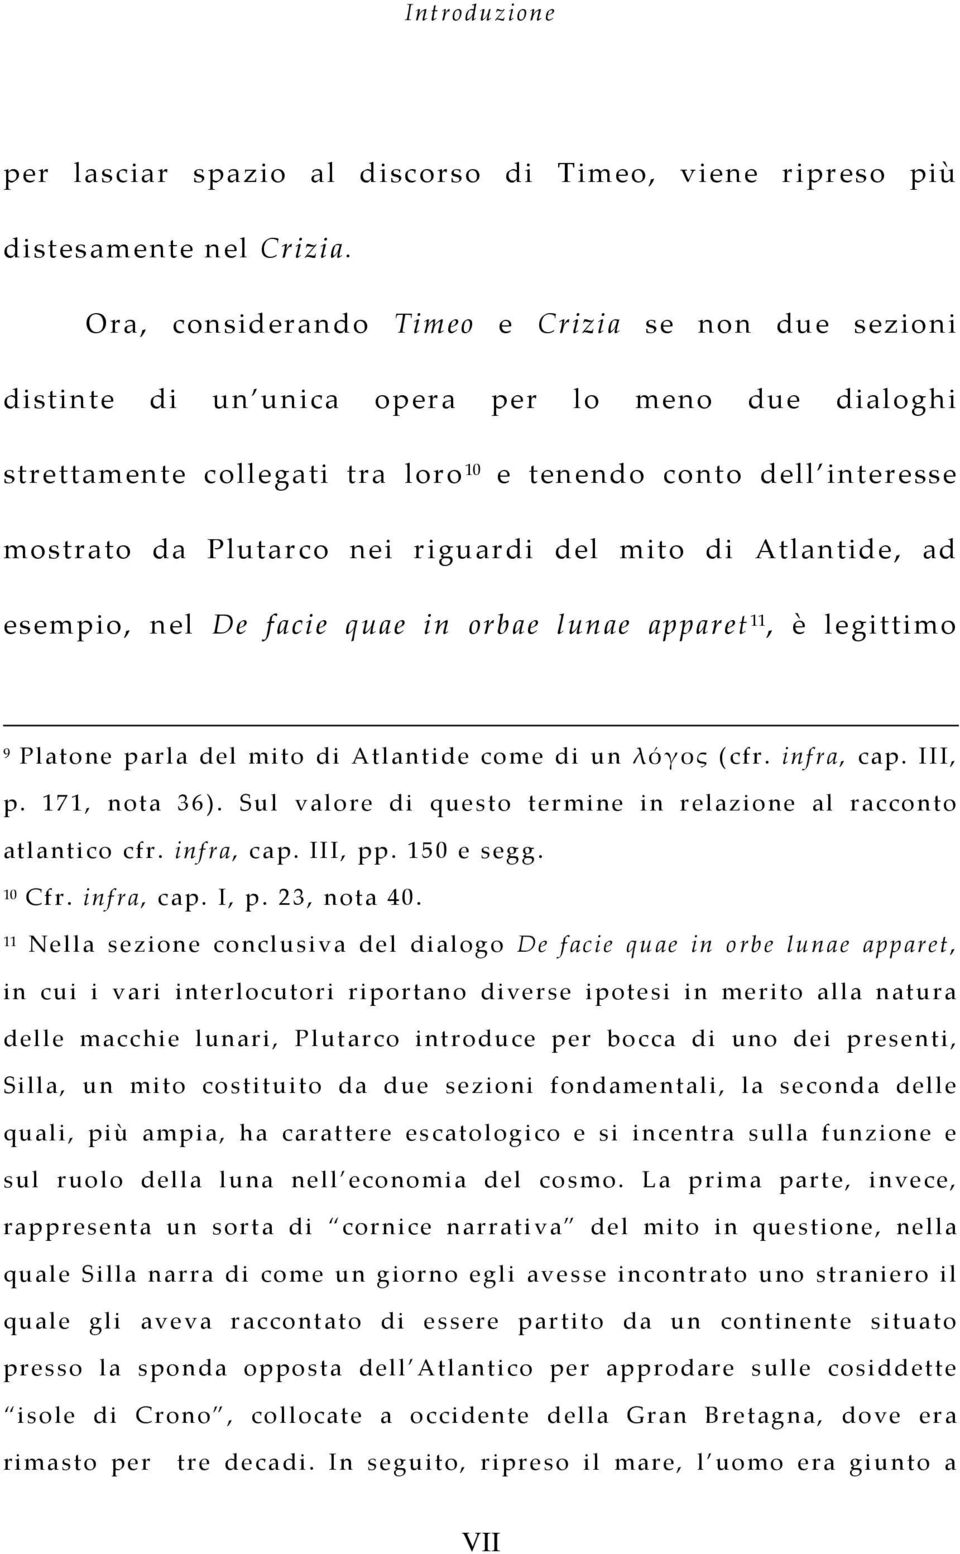 riguardi del mito di Atlantide, ad esempio, nel De facie quae in orbae lunae apparet 11, è legittimo 9 Platone parla del mito di Atlantide come di un λόγος (cfr. infra, cap. III, p. 171, nota 36).